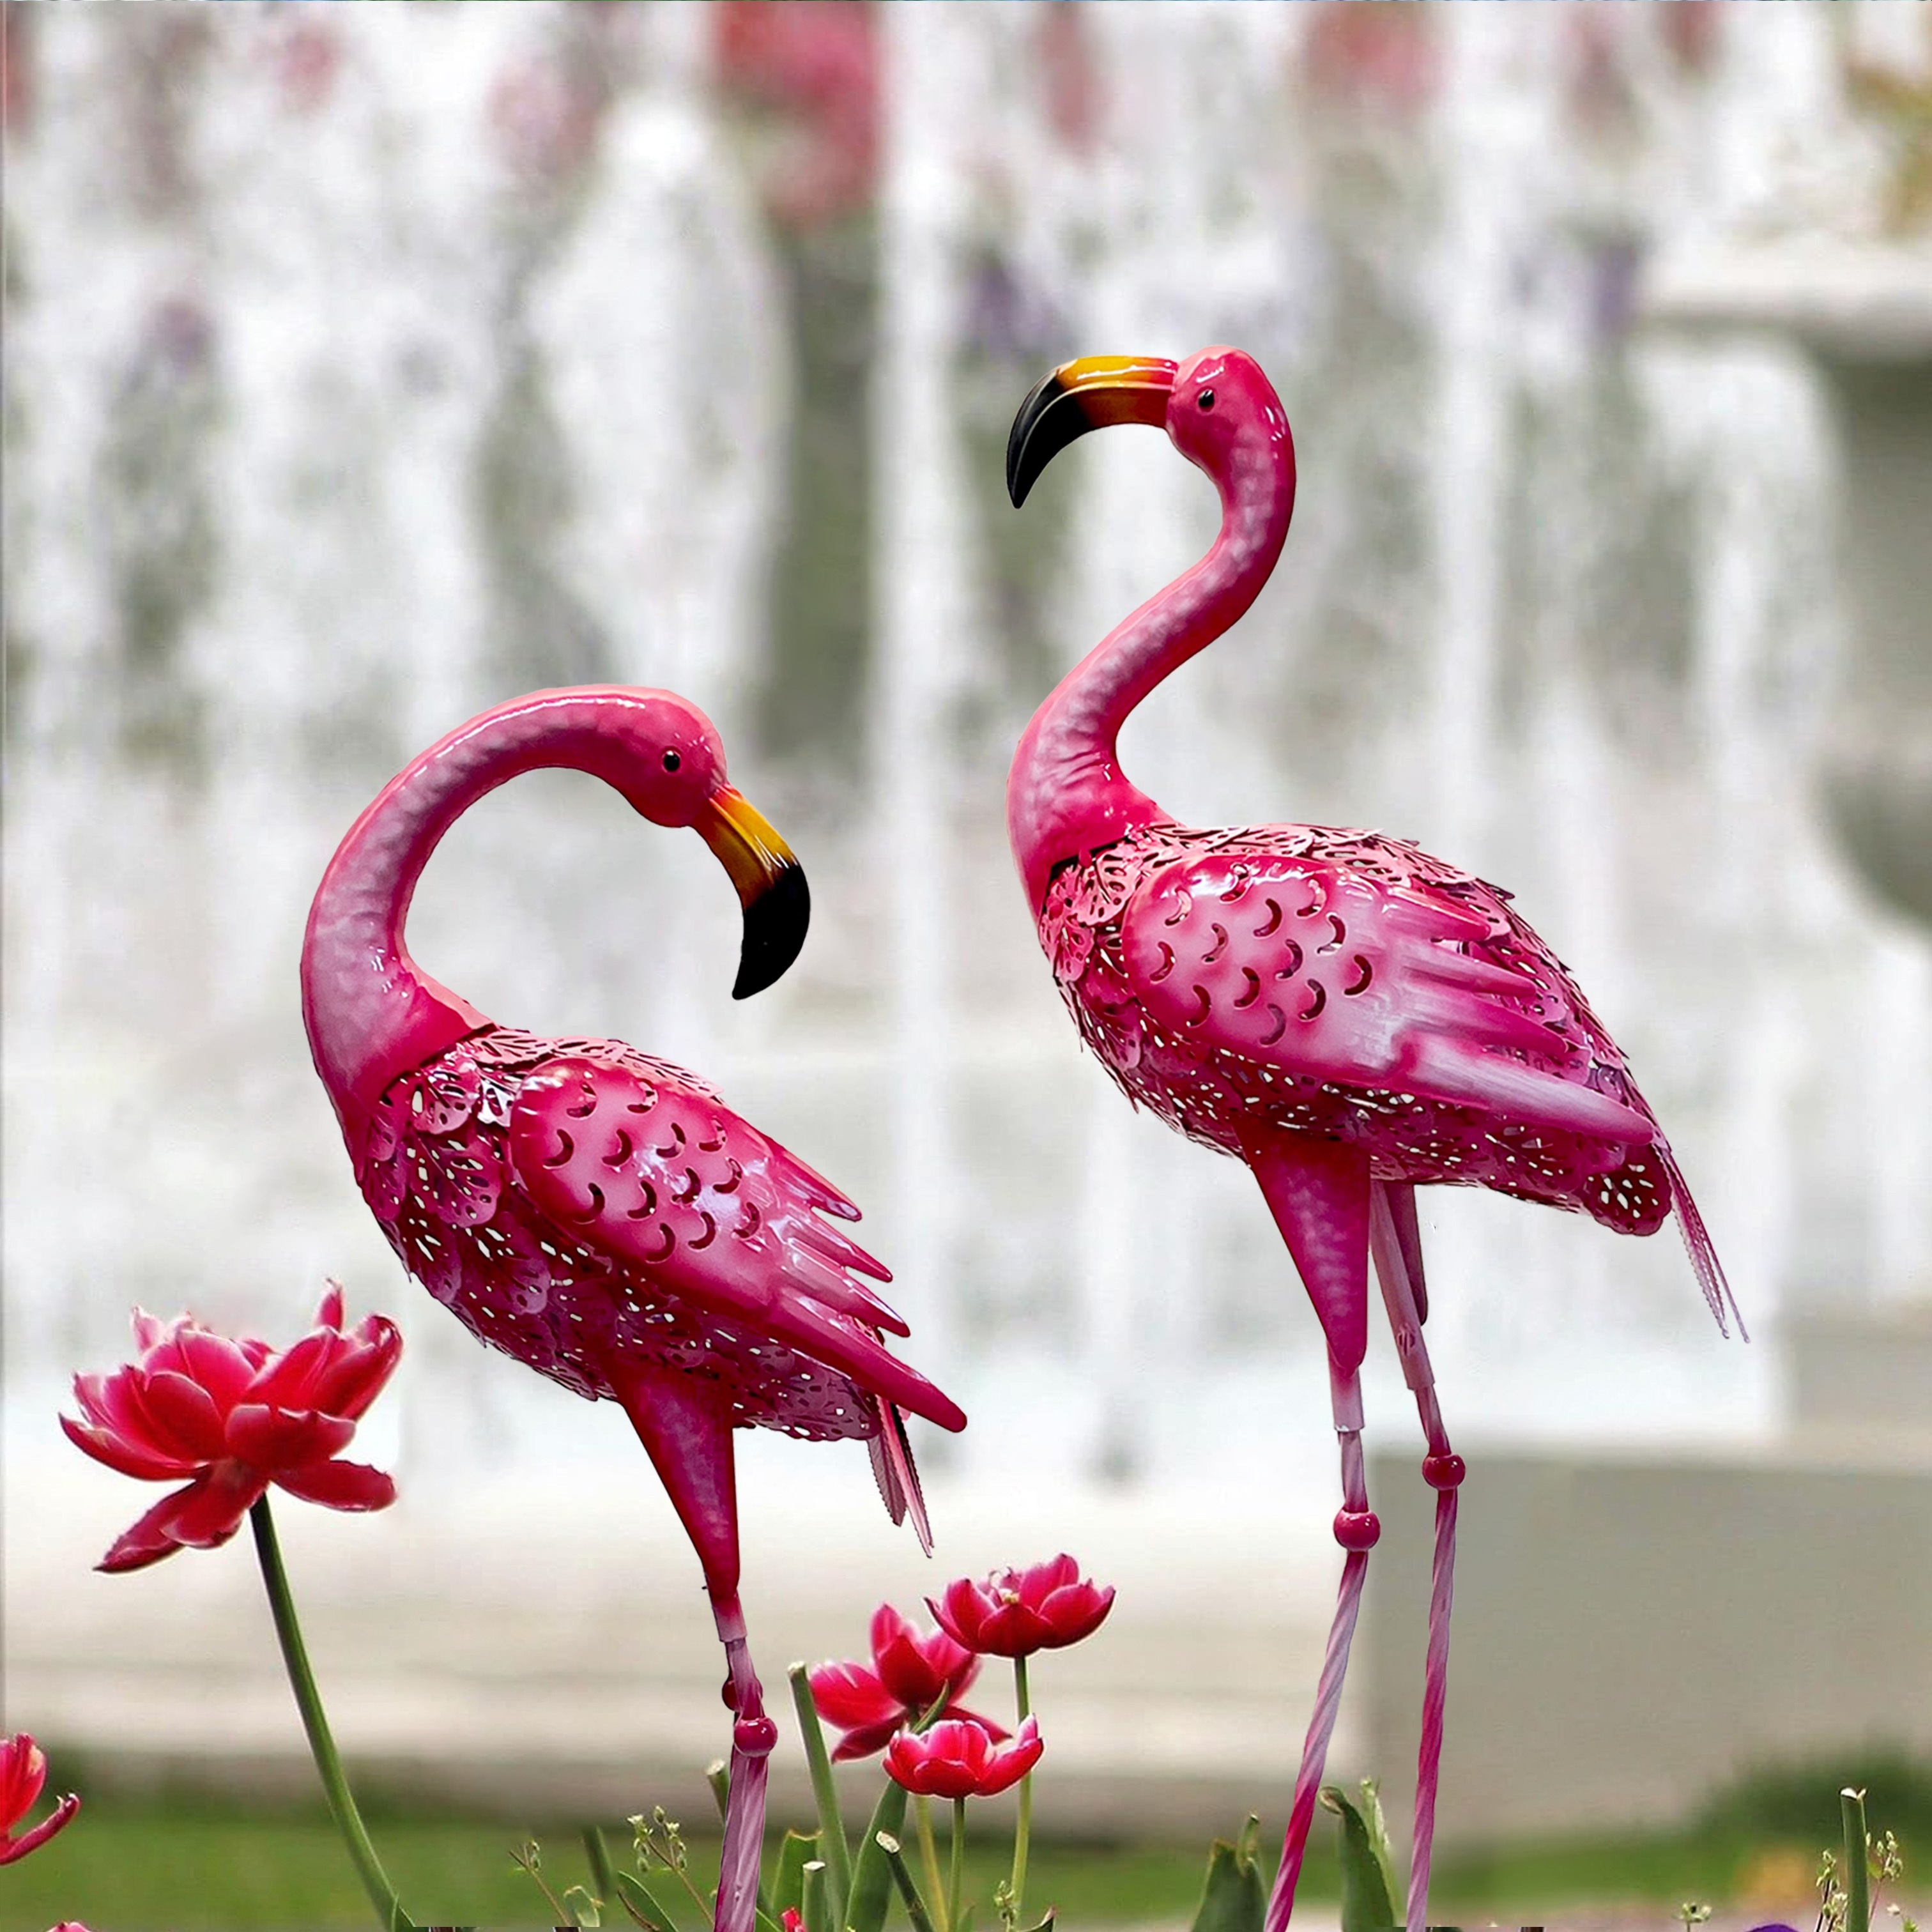 

2pcs Garden Pink Flamingo Statue Outdoor, Standing Metal Flamingo Garden Decoration, Metal Tall Bird Art Garden Sculpture For Patio Lawn Yard Ornaments Outside Decoration, Unique Housewarming Gifts